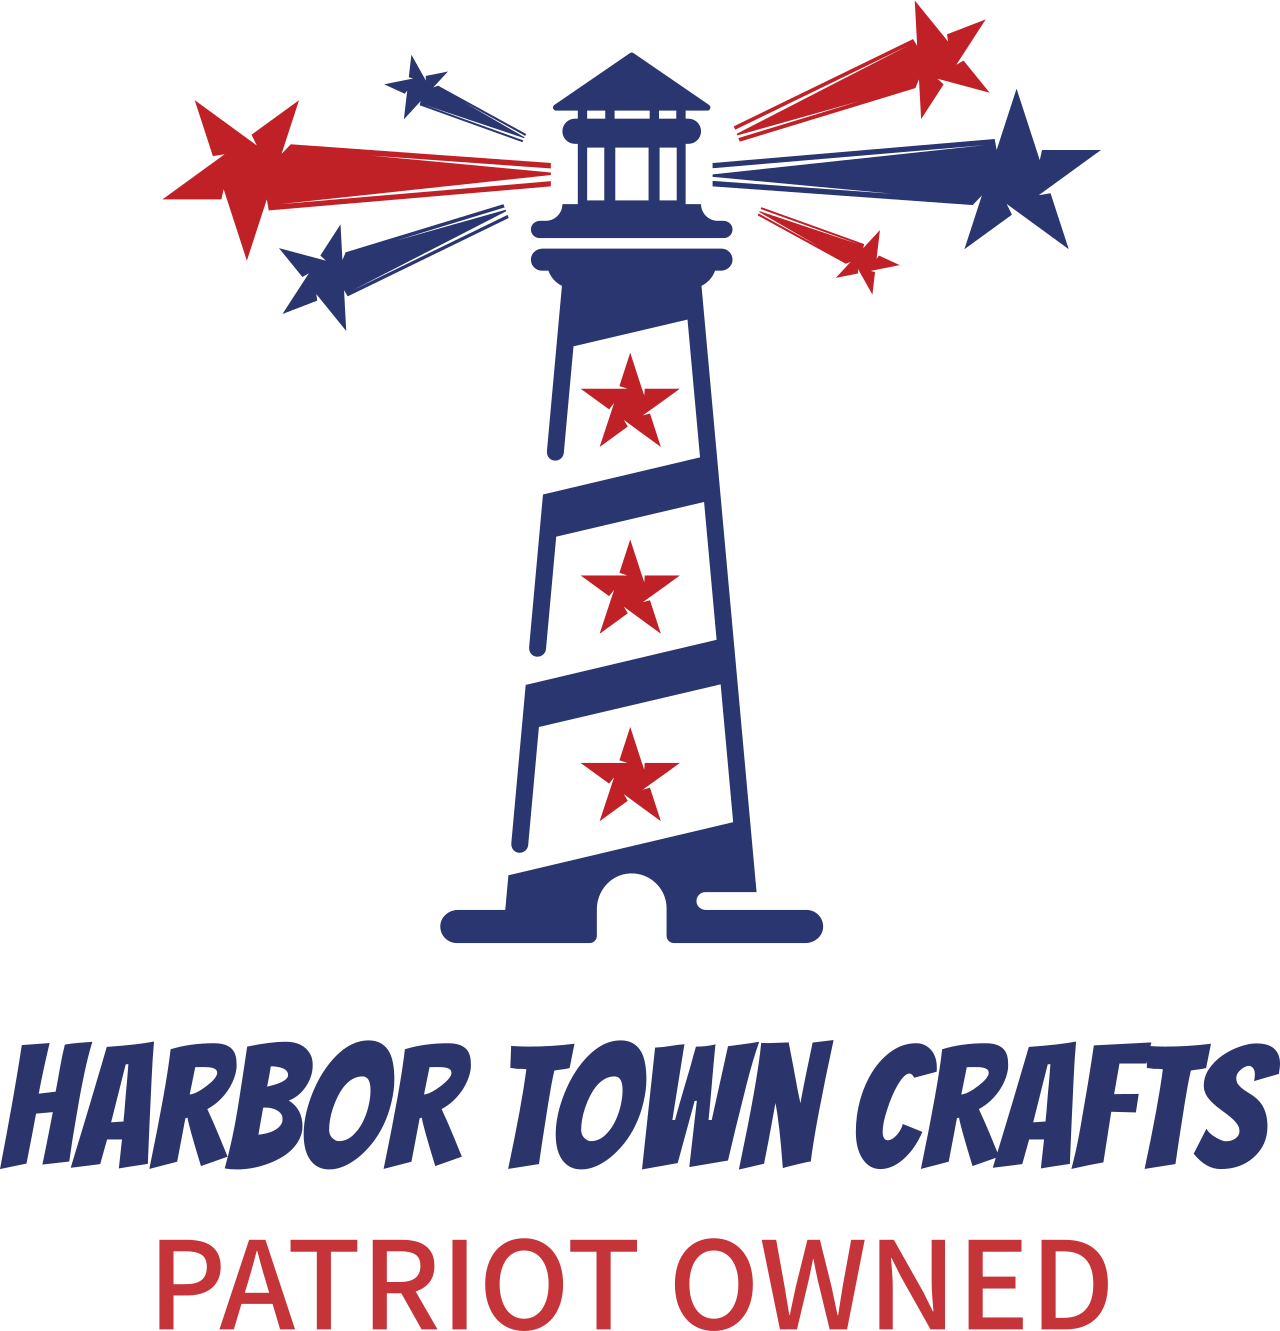 Harbor Town Crafts